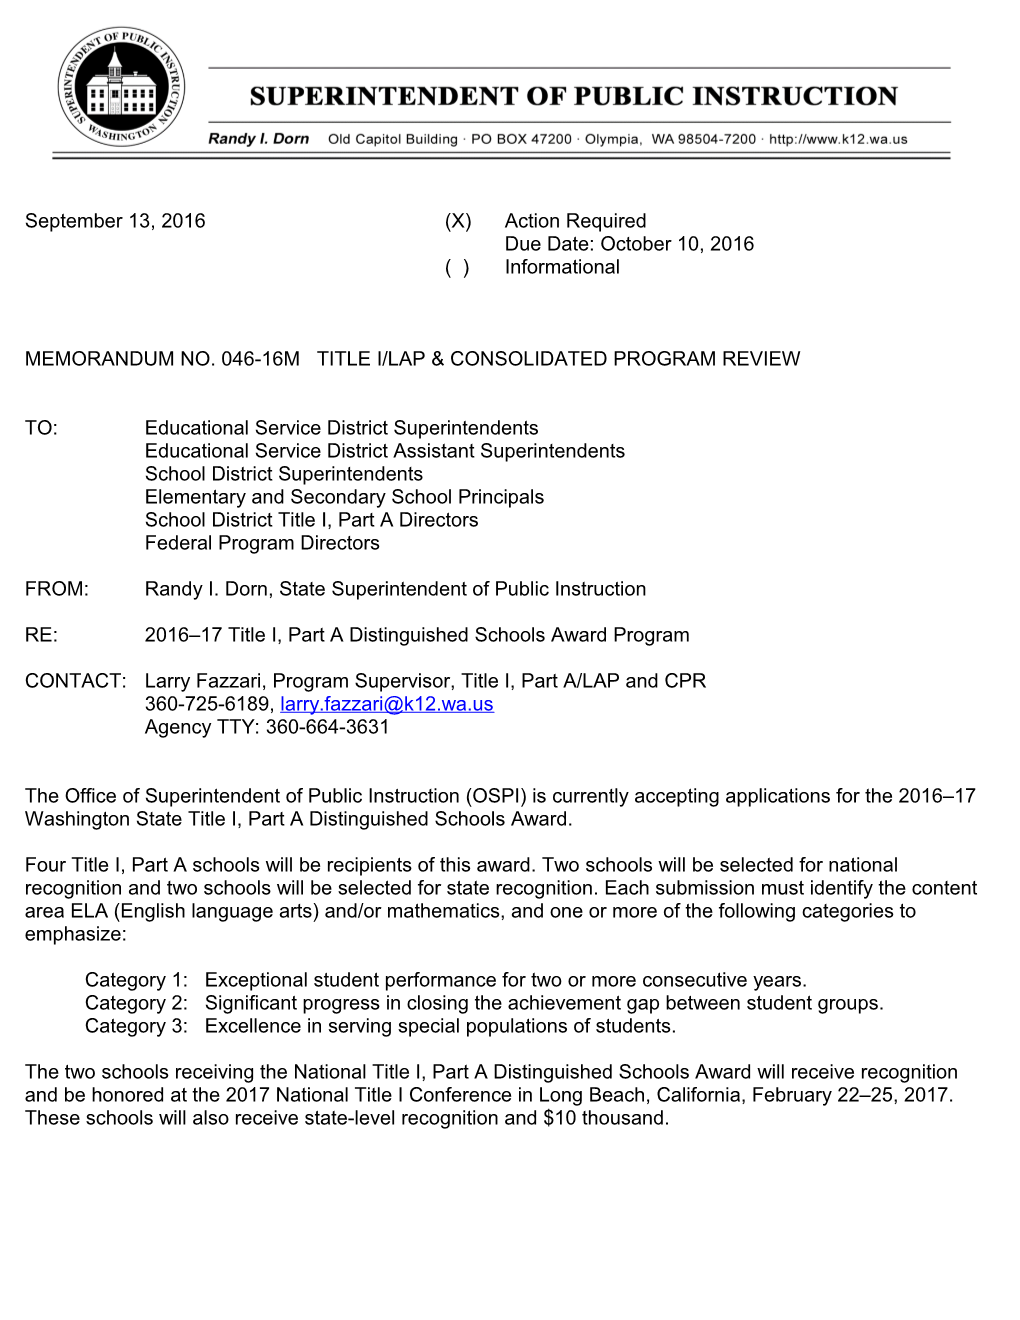 Memorandum No.046-16M Title I/Lap & Consolidated Program Review